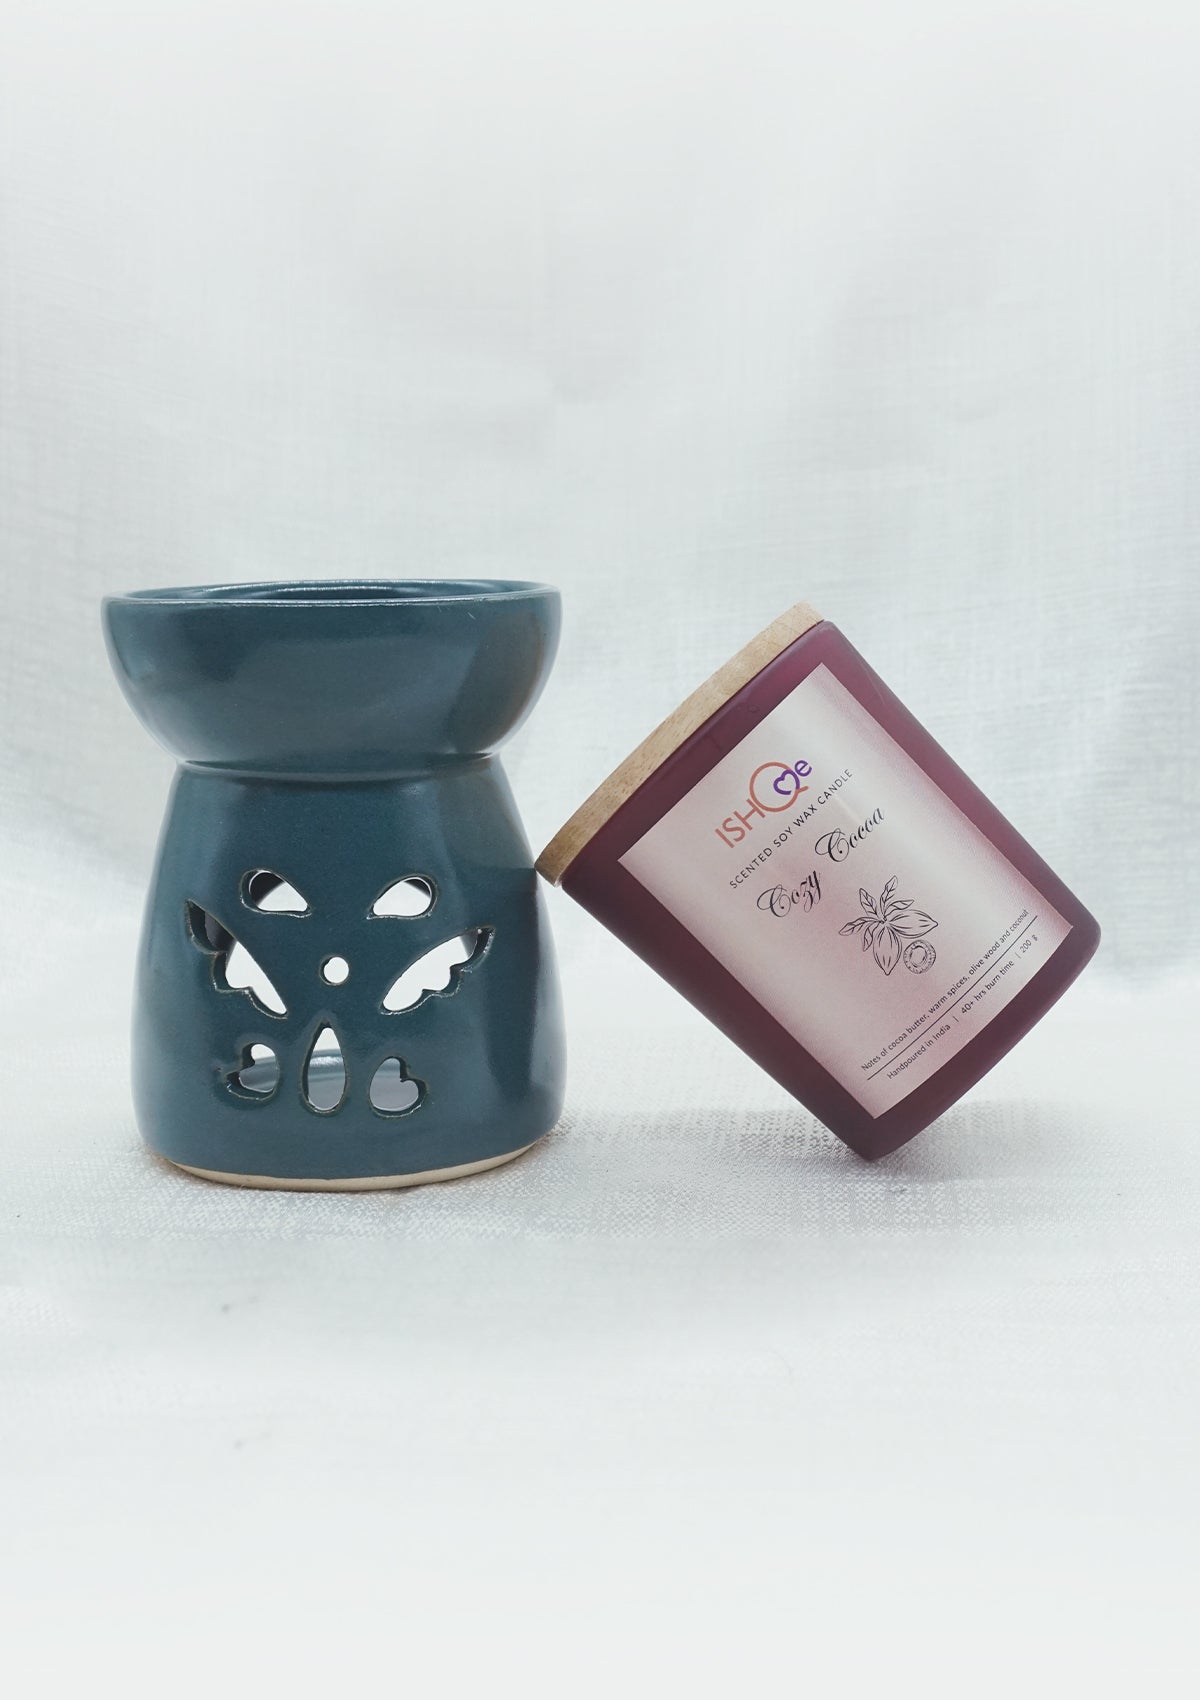 IshqME calm symphony: Twilight Blue Ceramic Diffuser & Cozy Cocoa Candle - IshqMe